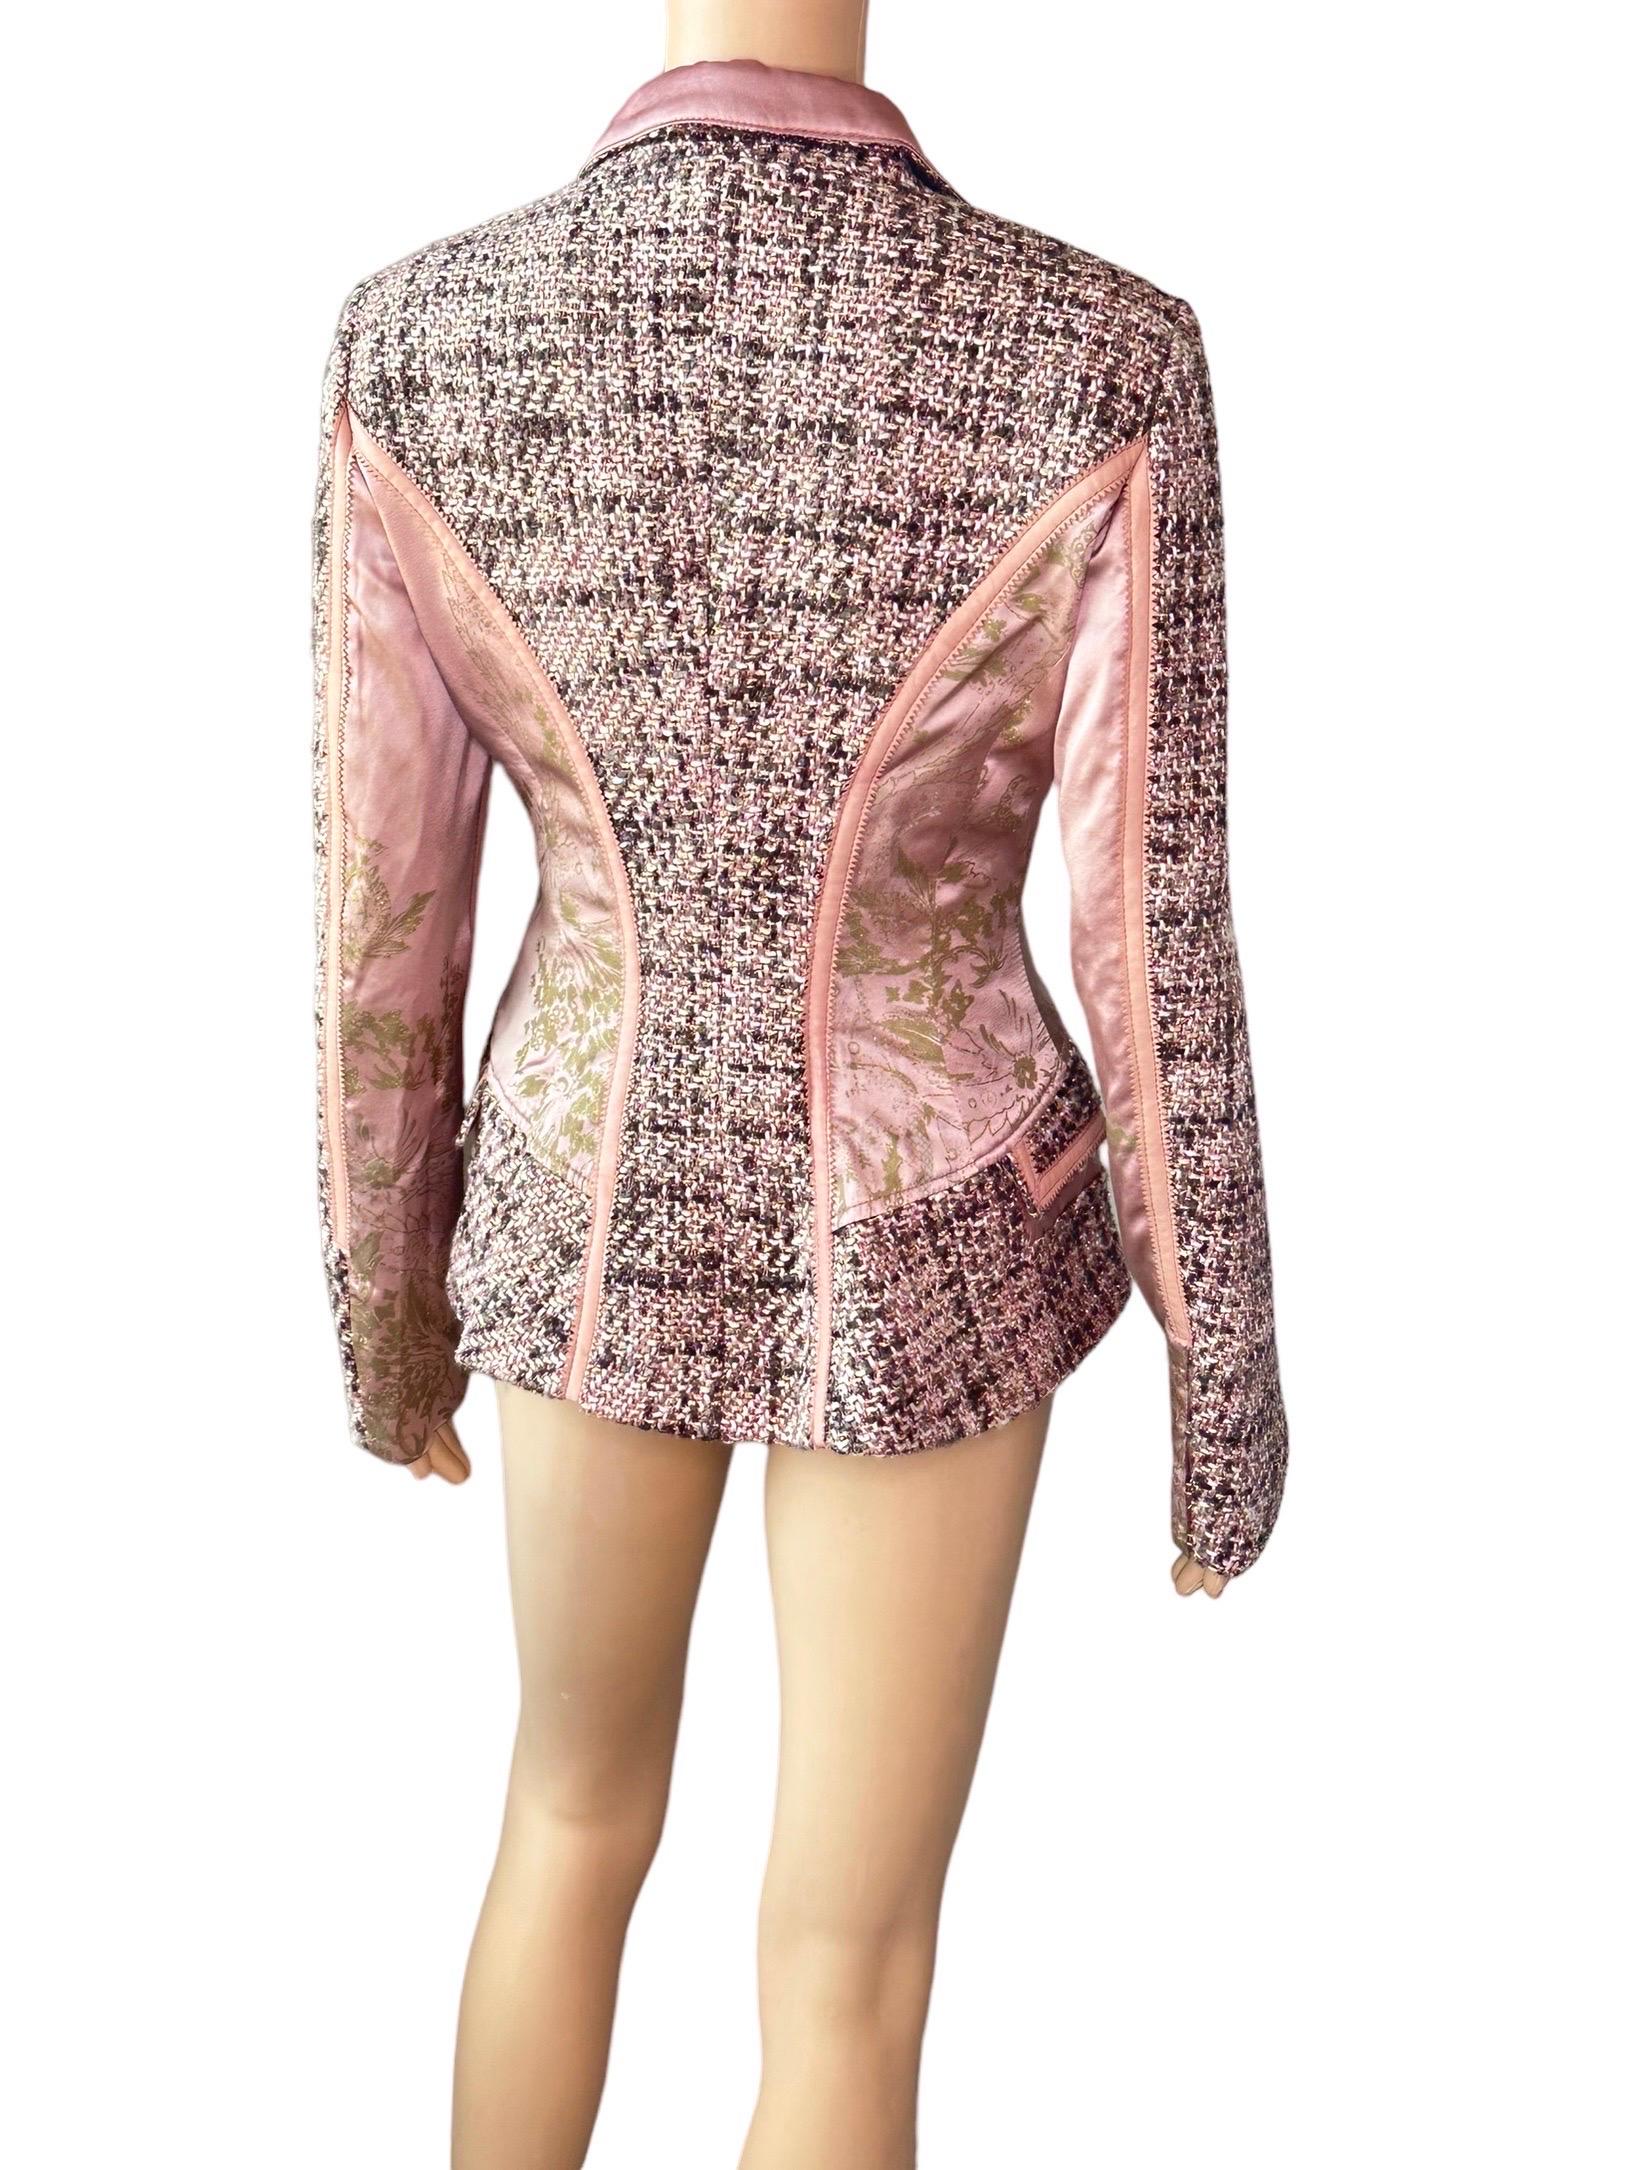 Roberto Cavalli c.2005 Bustier Tweed Lace Up Corset Top & Blazer 2 Piece Set  For Sale 14